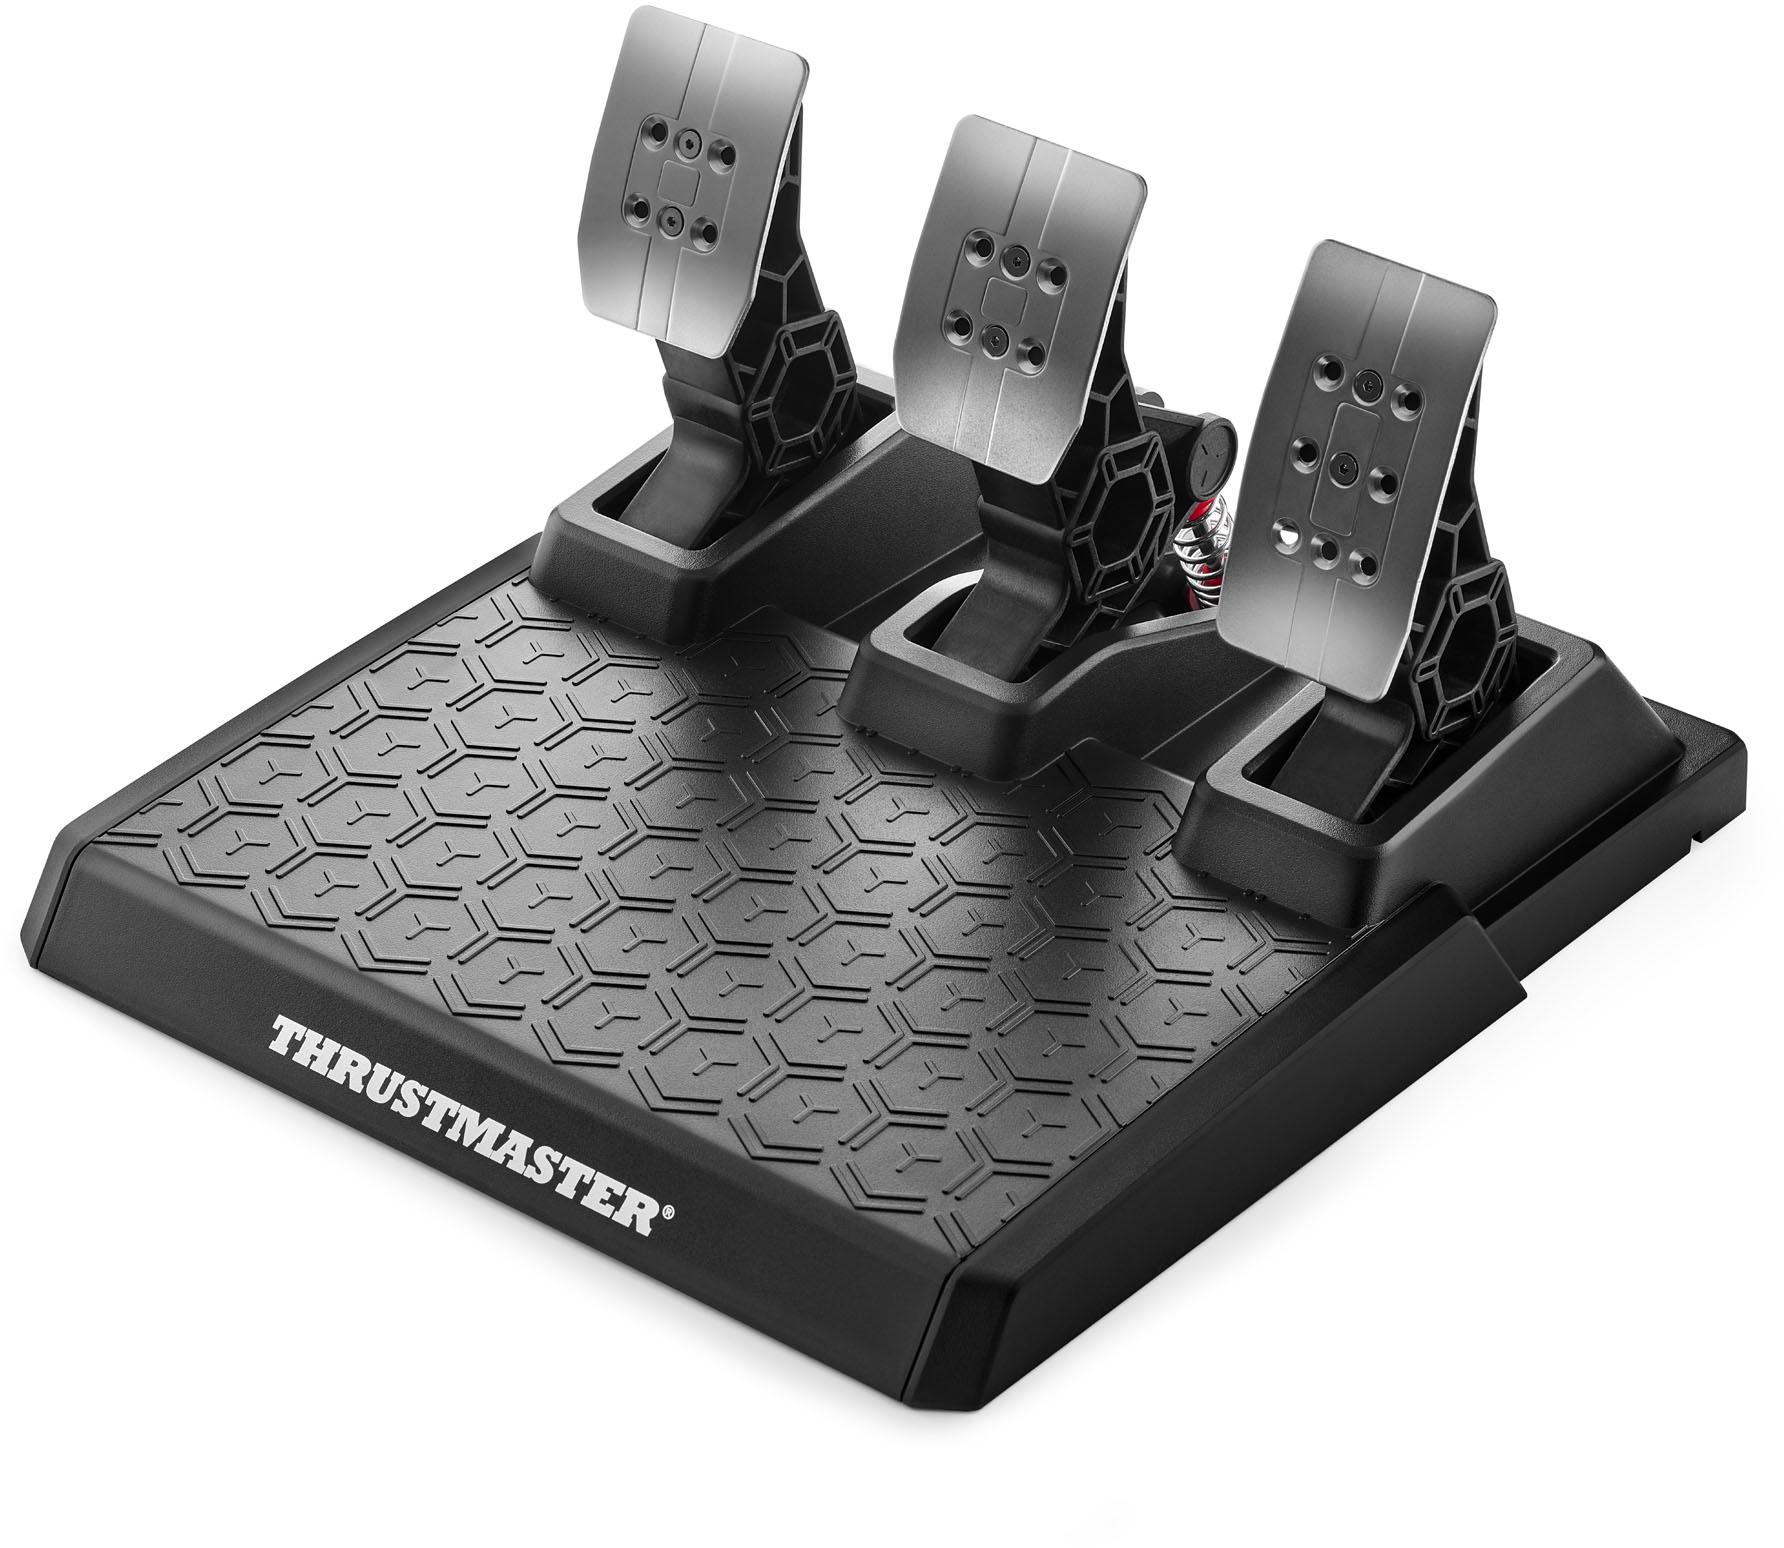 Thrustmaster T248 sim racing wheel review